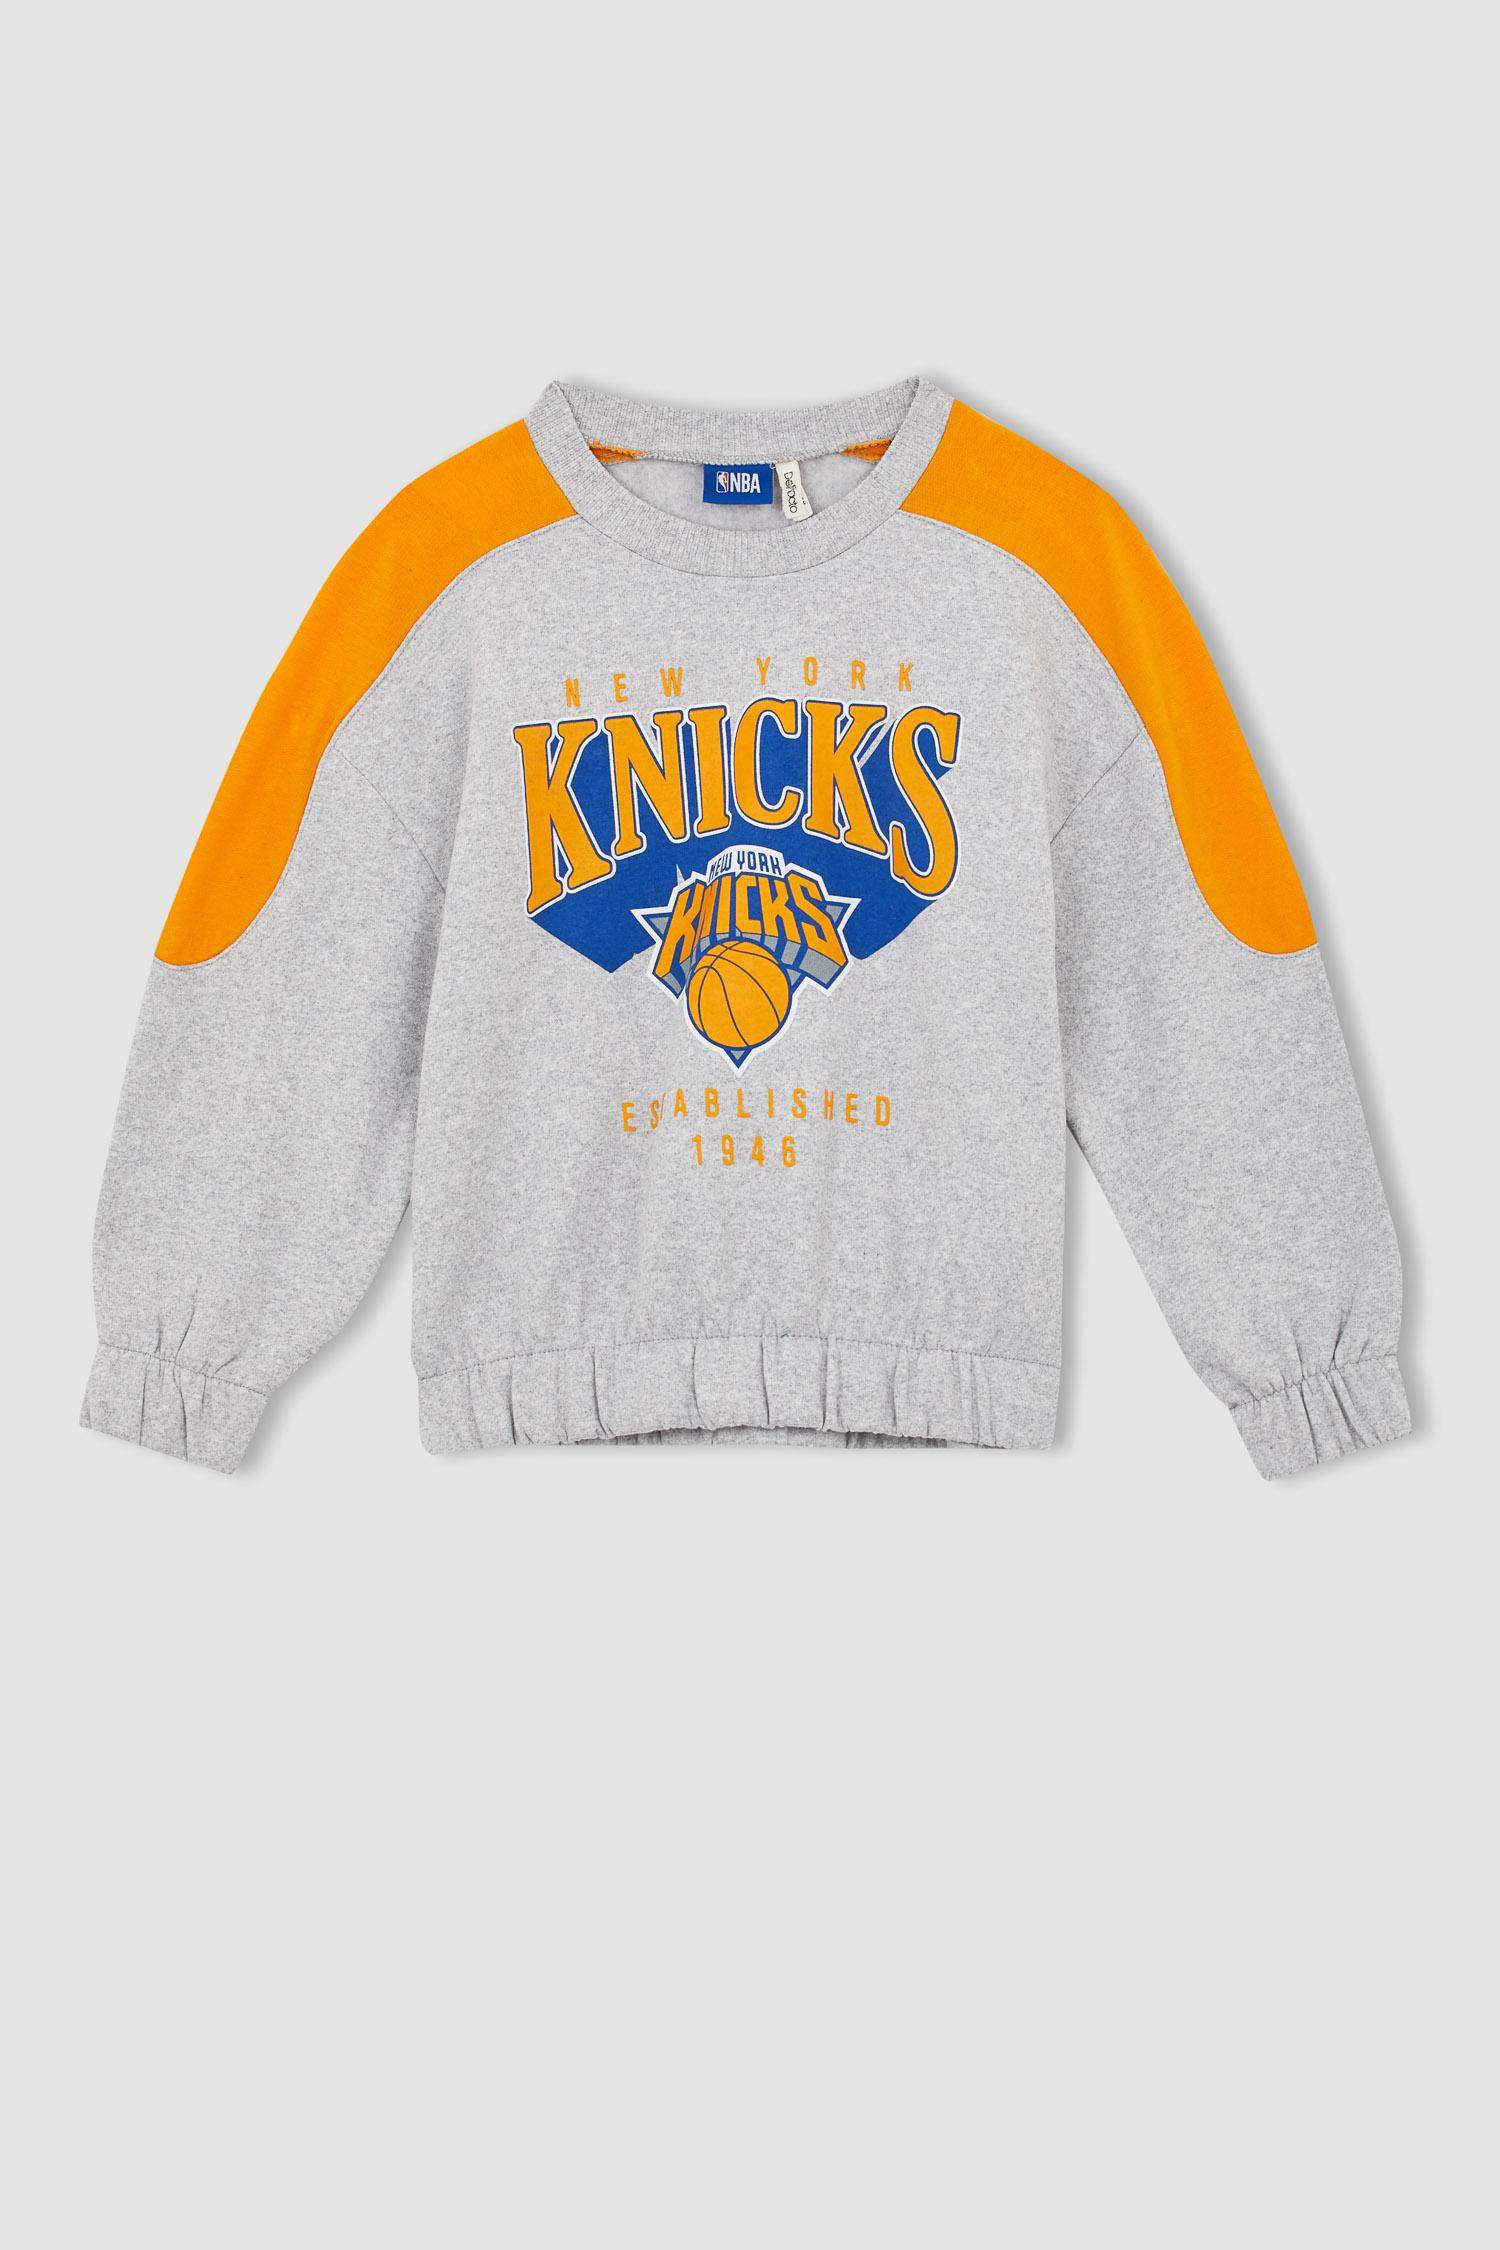 New York Knicks Women's NBA Long Sleeve Baby Jersey Crew Neck Tee